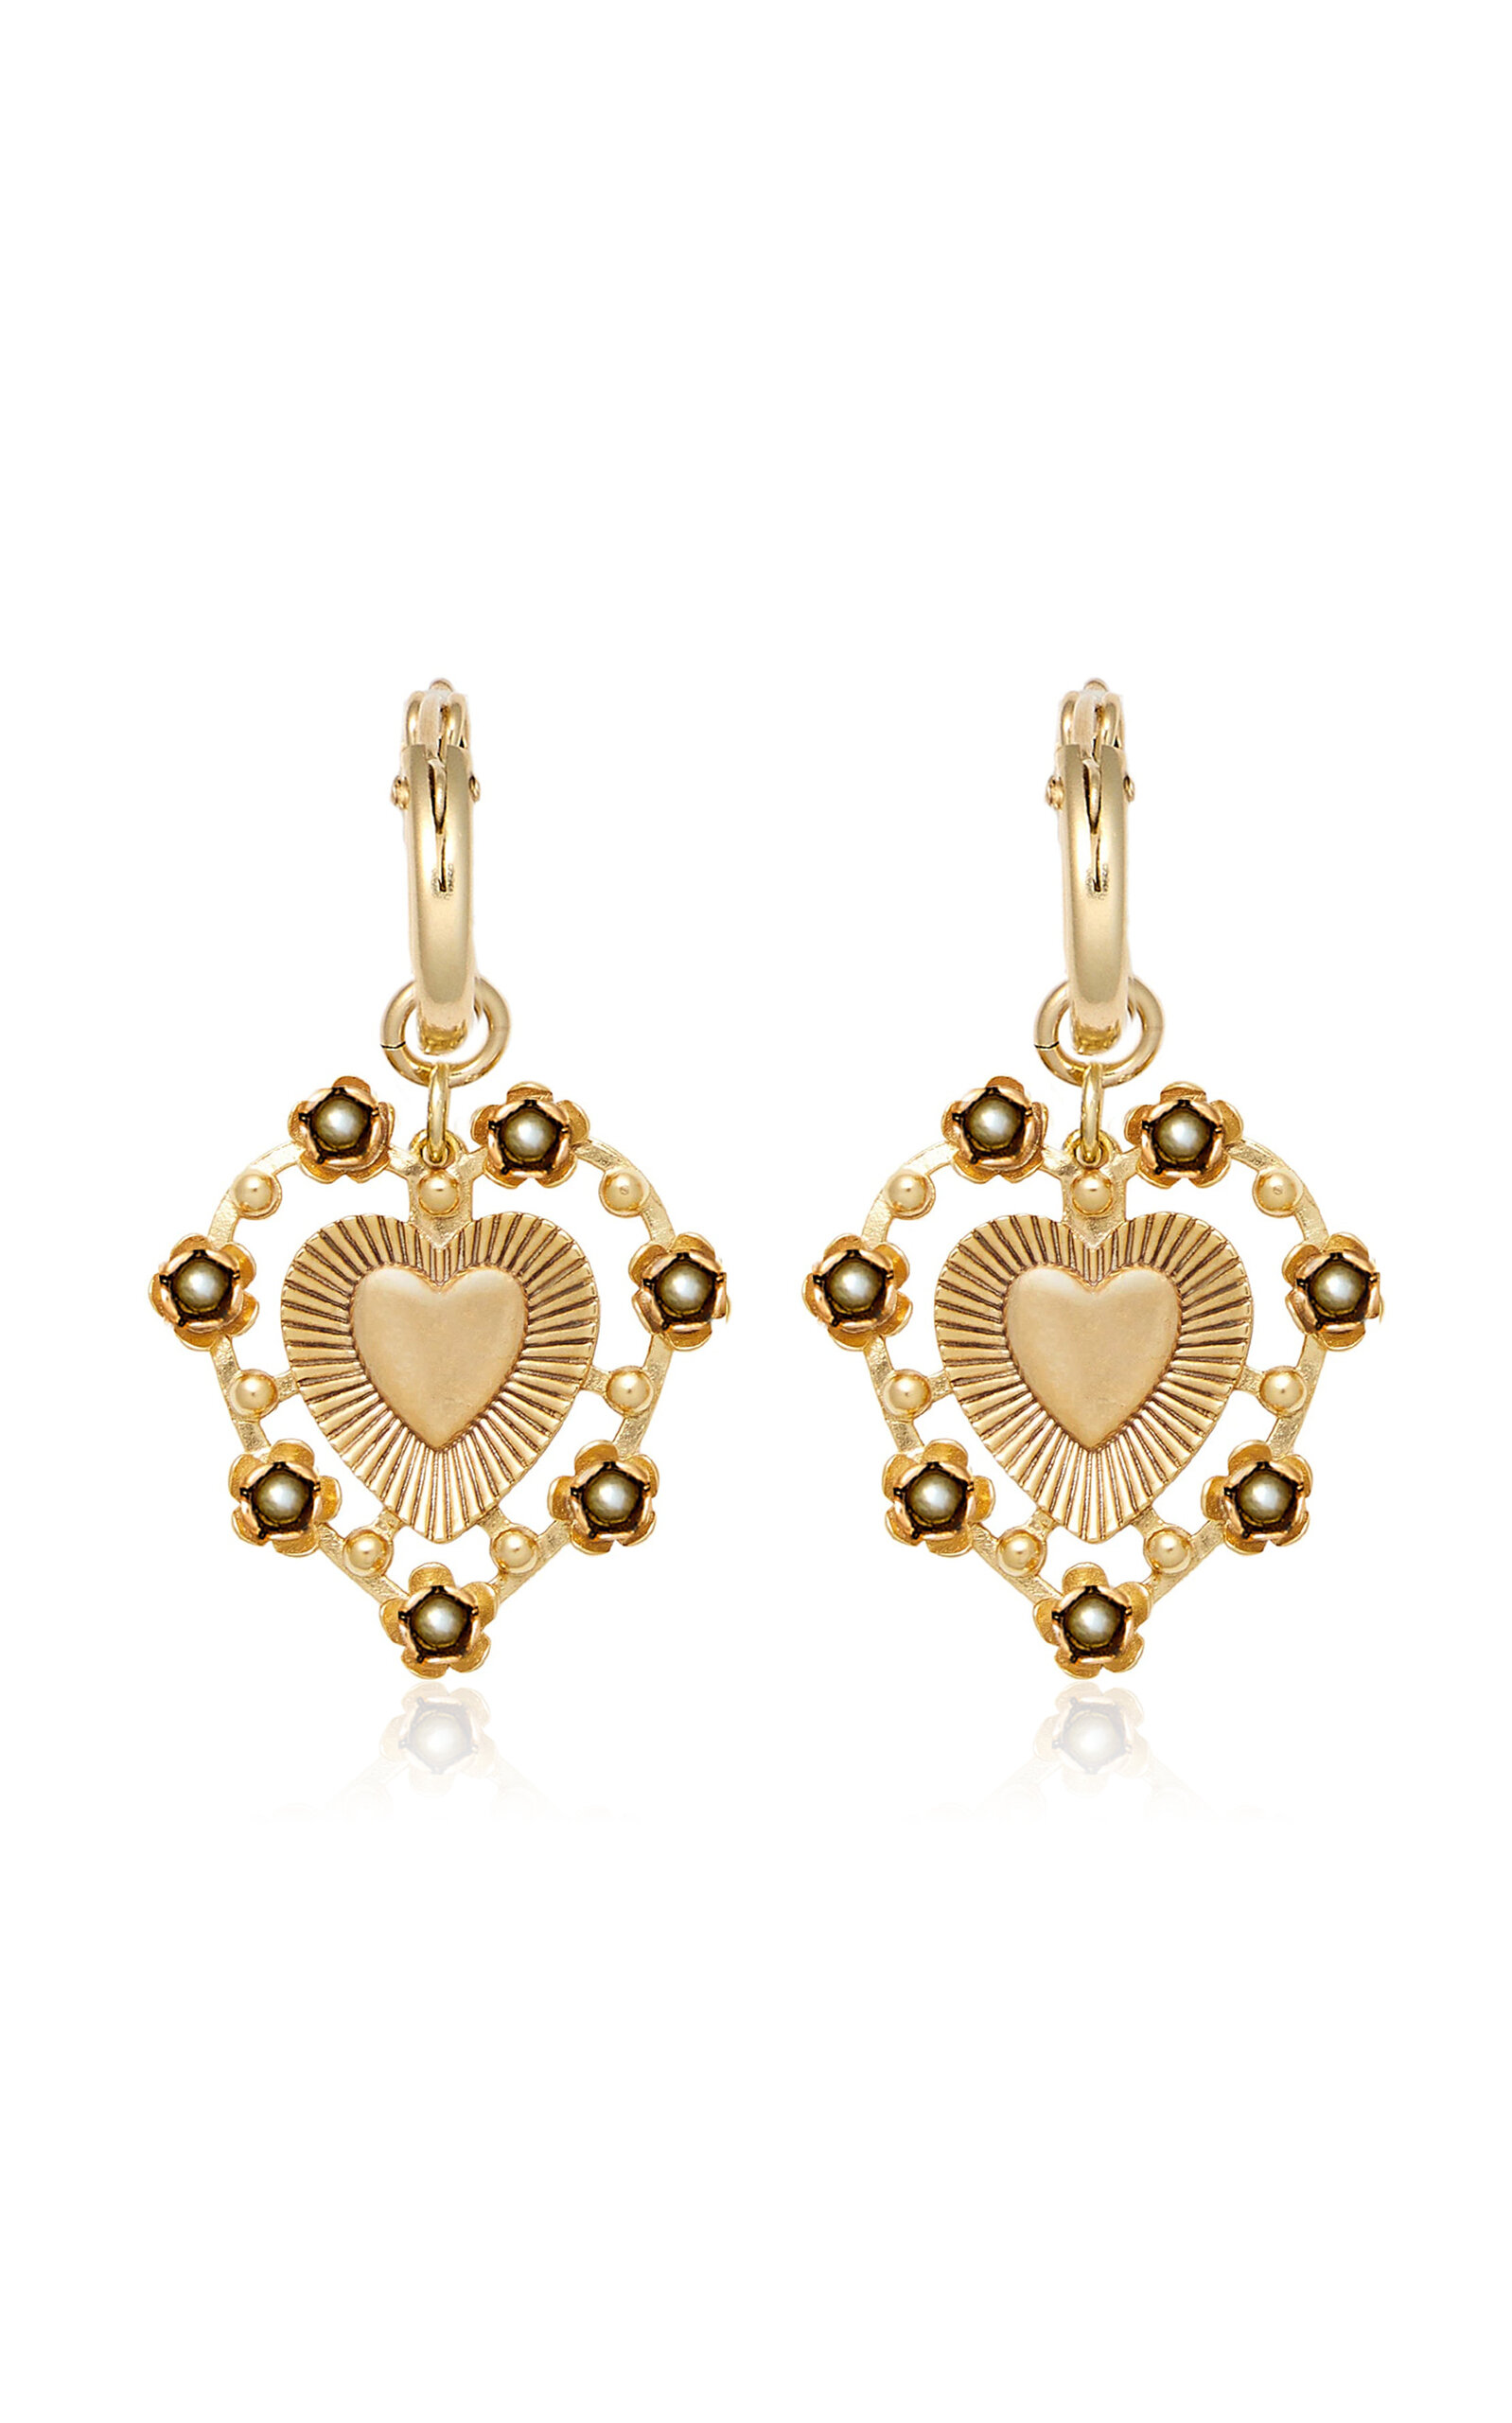 Adele Pearl 24K Gold-Plated Earrings